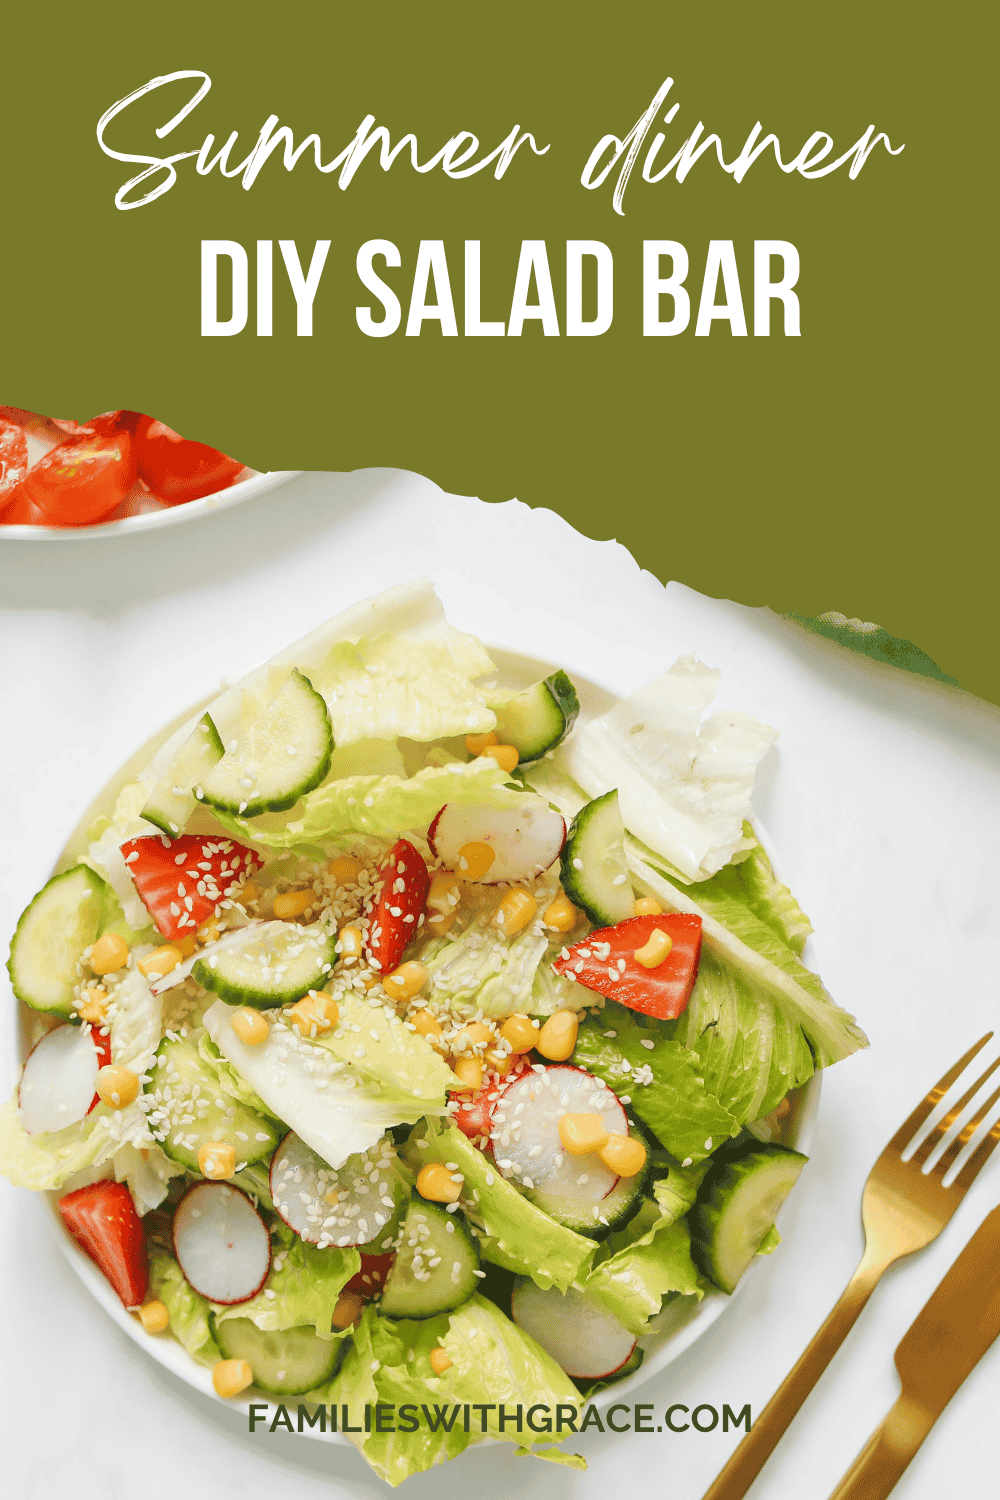 Simple summer dinner ideas: DIY Salad Bar